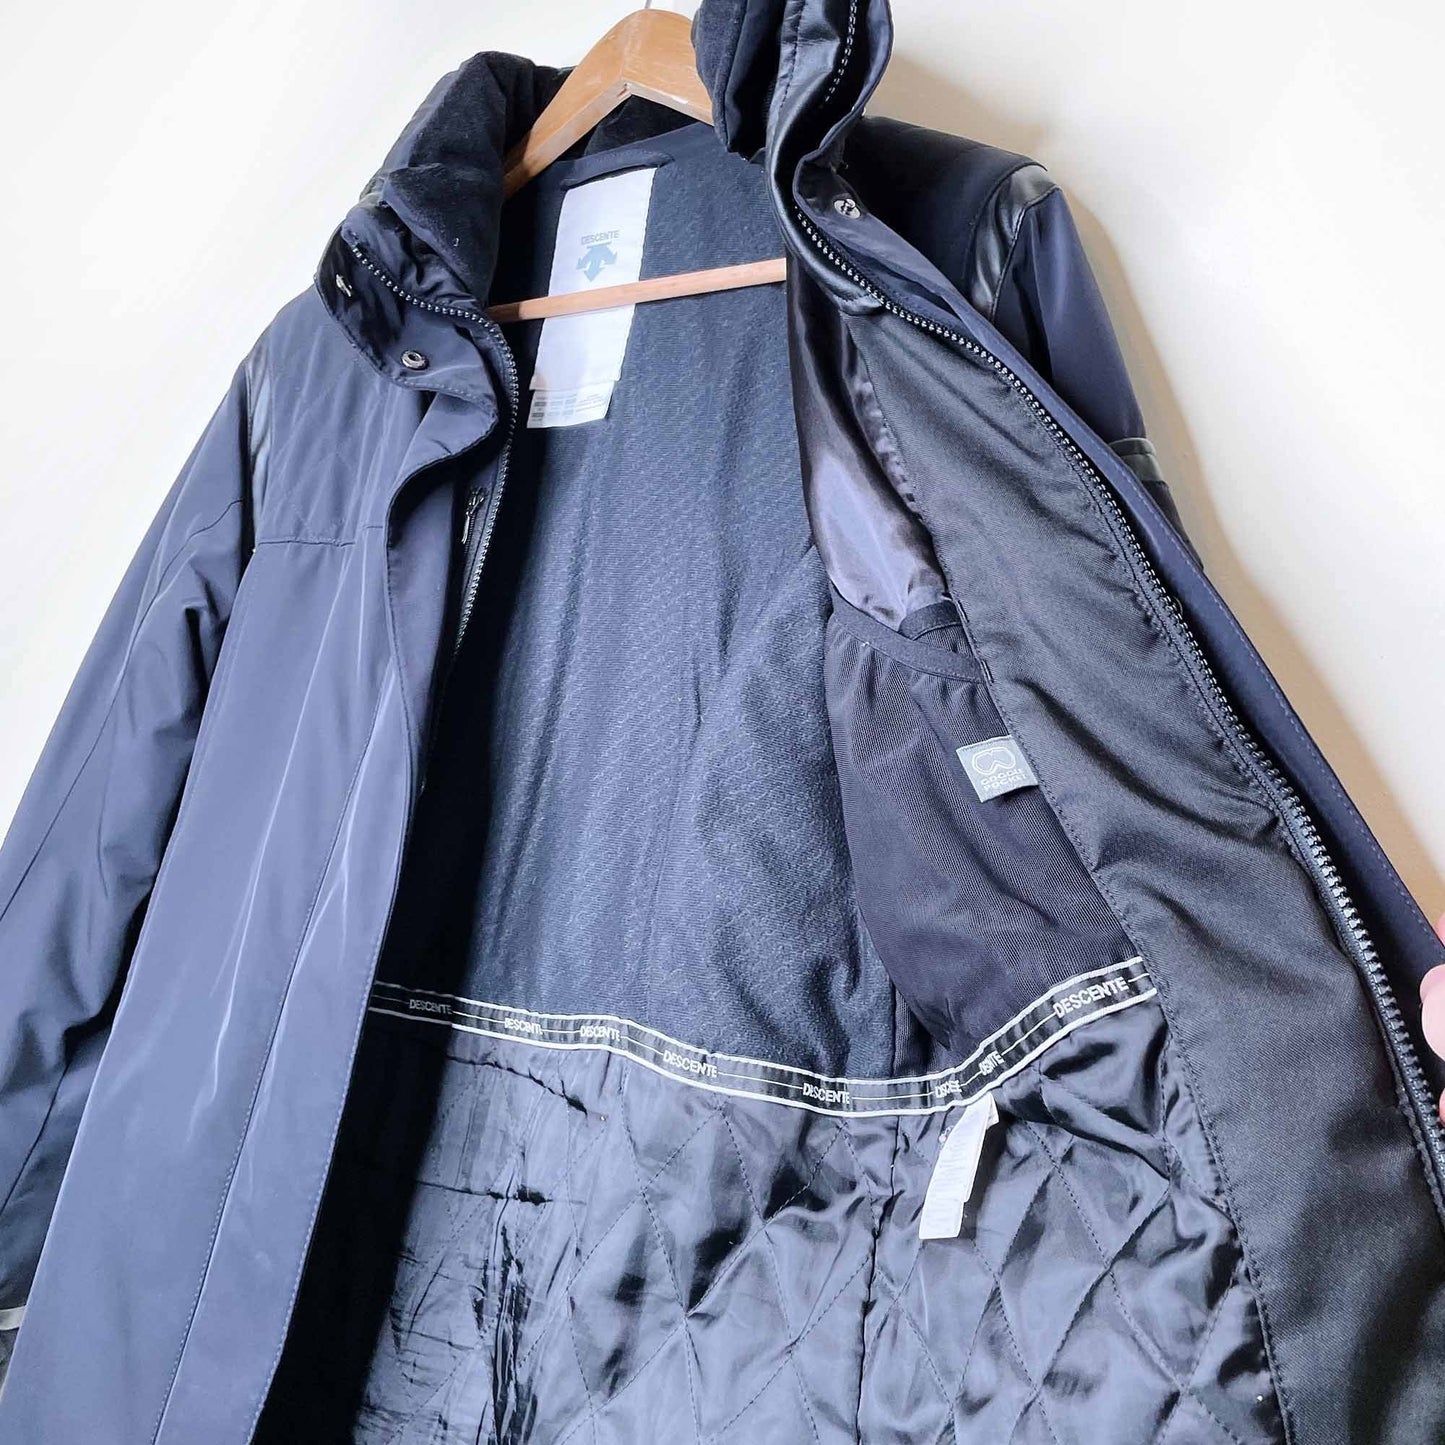 descente women's long ski jacket with leather trim - size xs/6